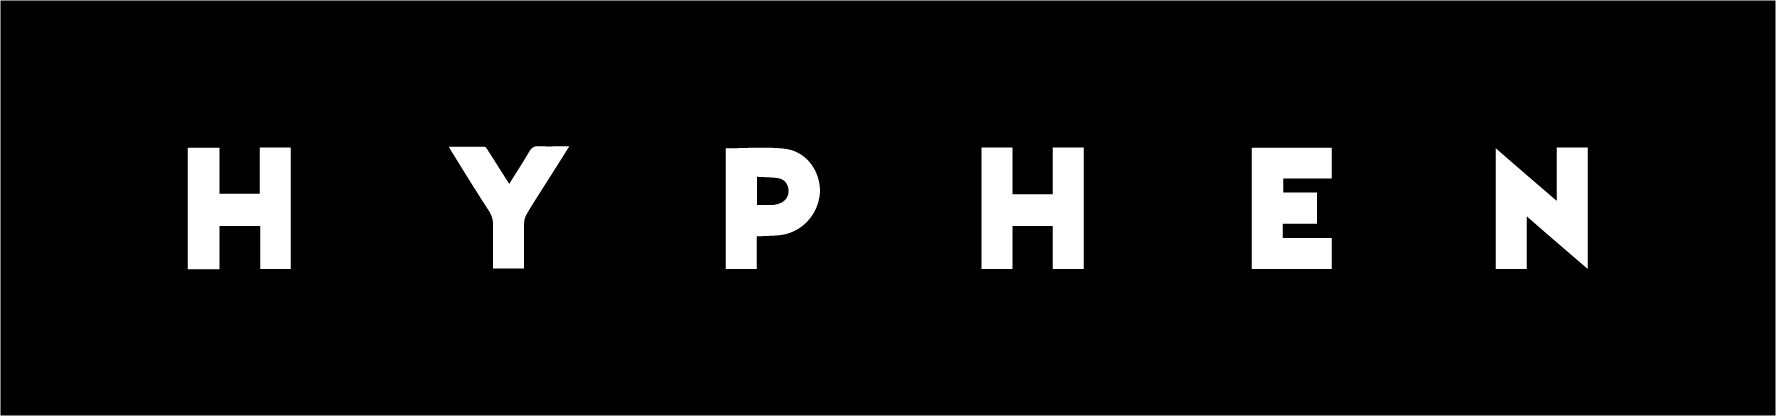 Logo_payoff_black-1